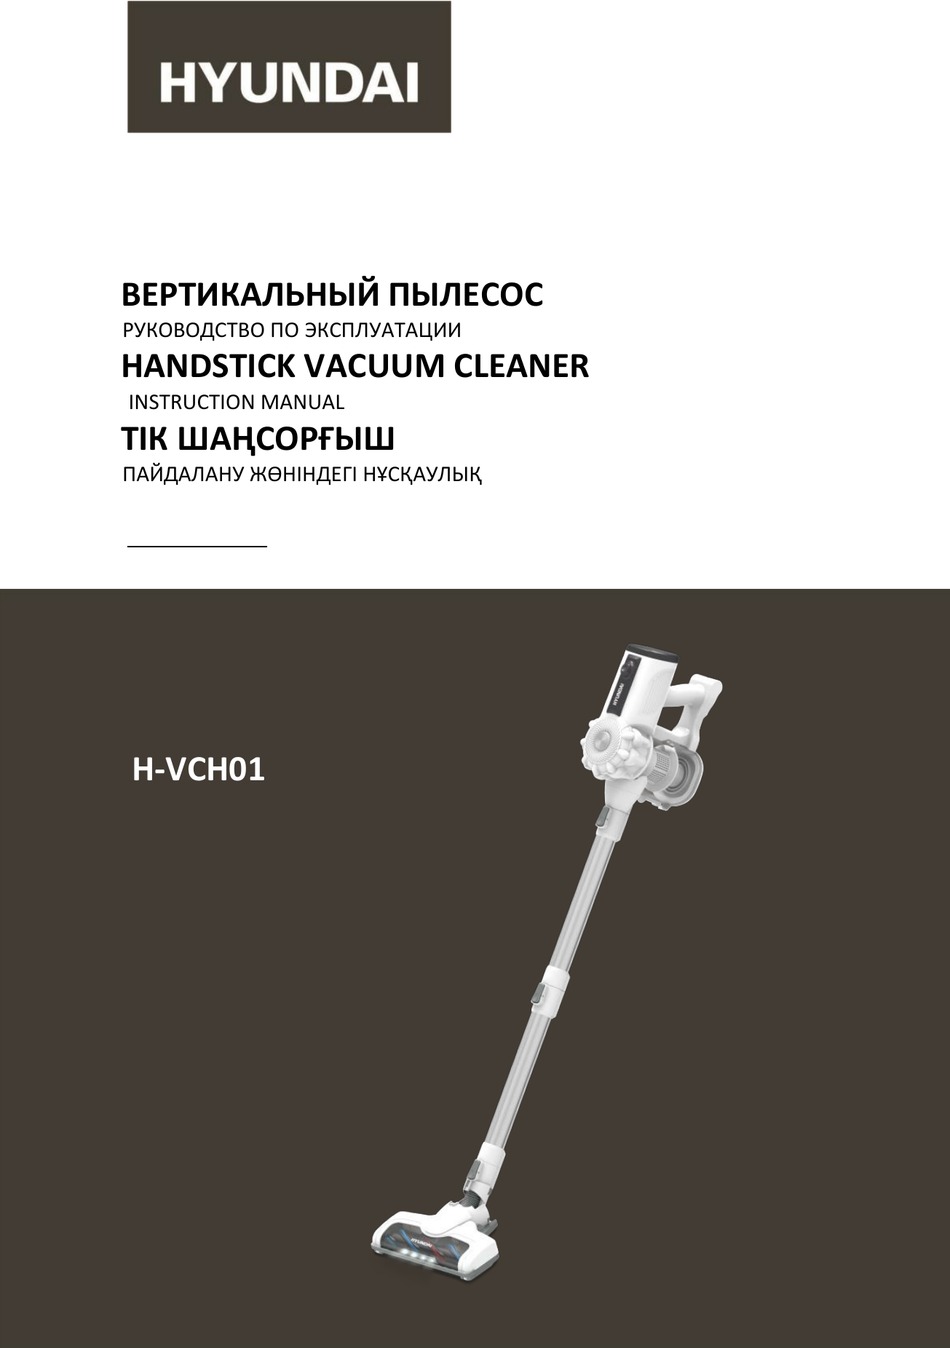 HYUNDAI H-VCH01 INSTRUCTION MANUAL Pdf Download | ManualsLib